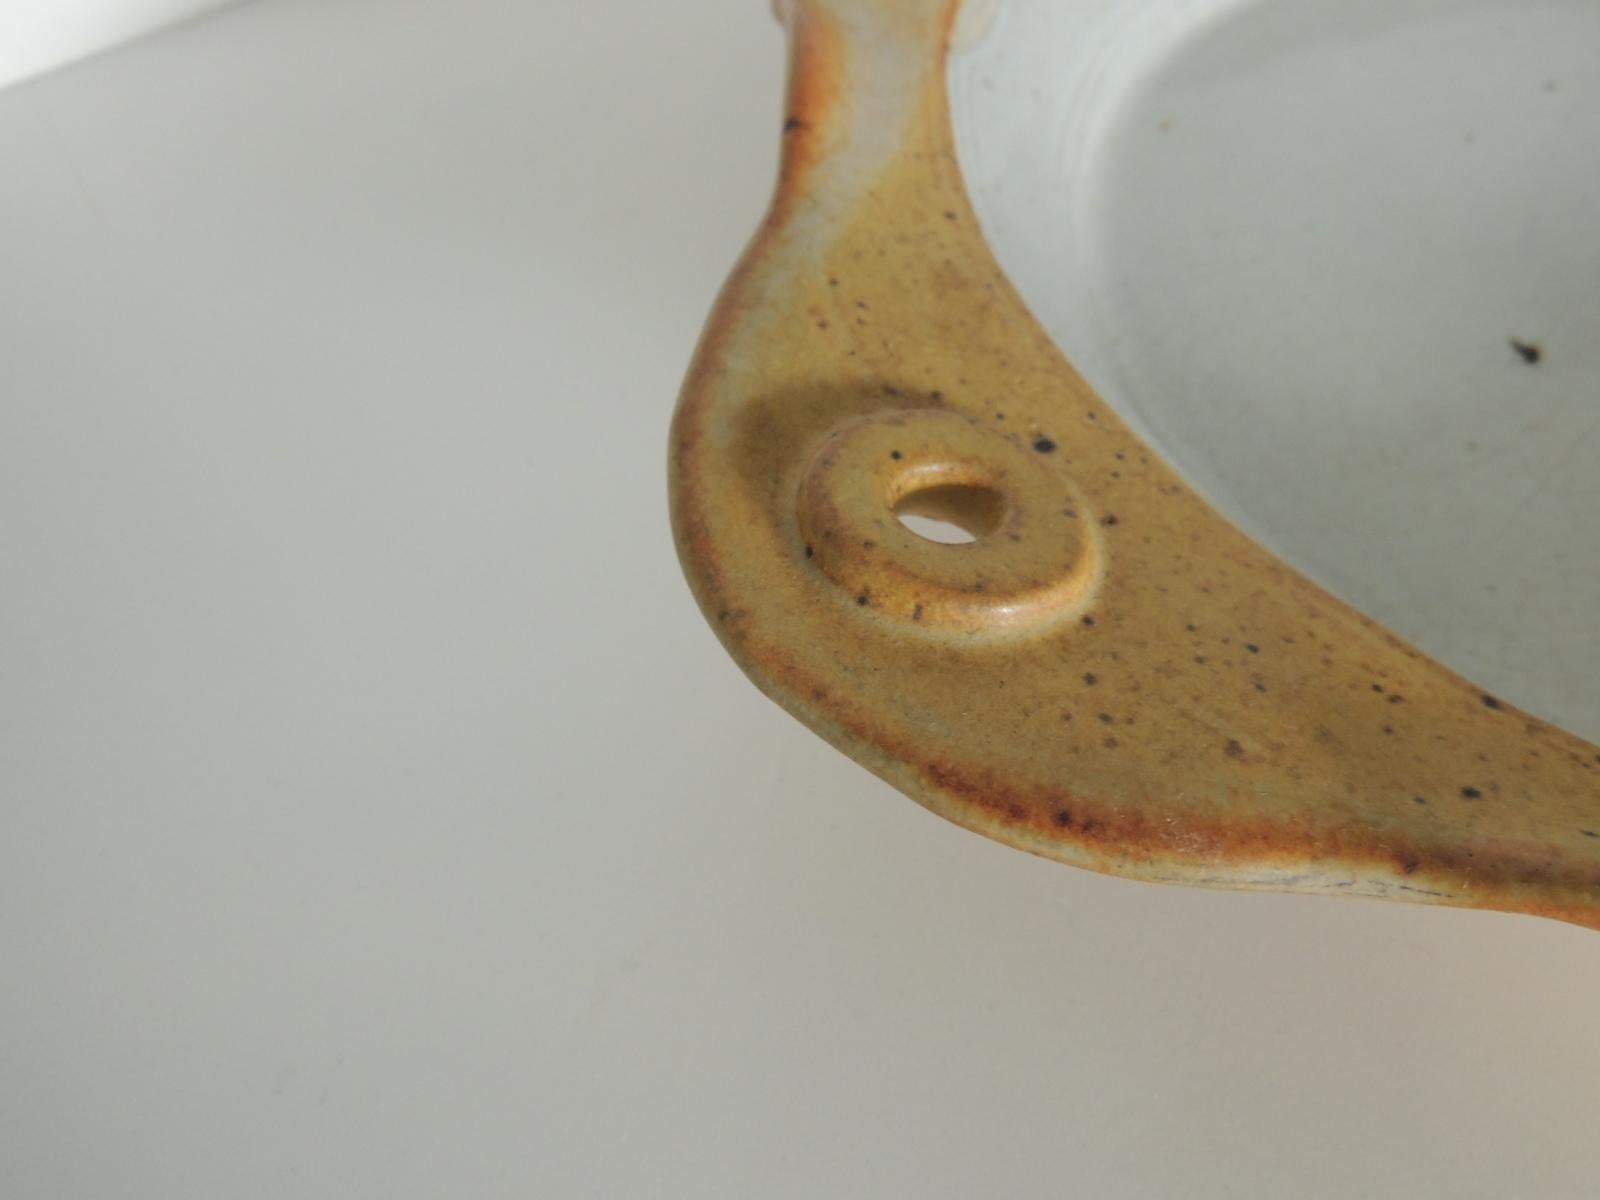 Mid-Century Modern round decorative serving bowl
Pie style ceramic bowl with pierced handles.
Size: 11.5